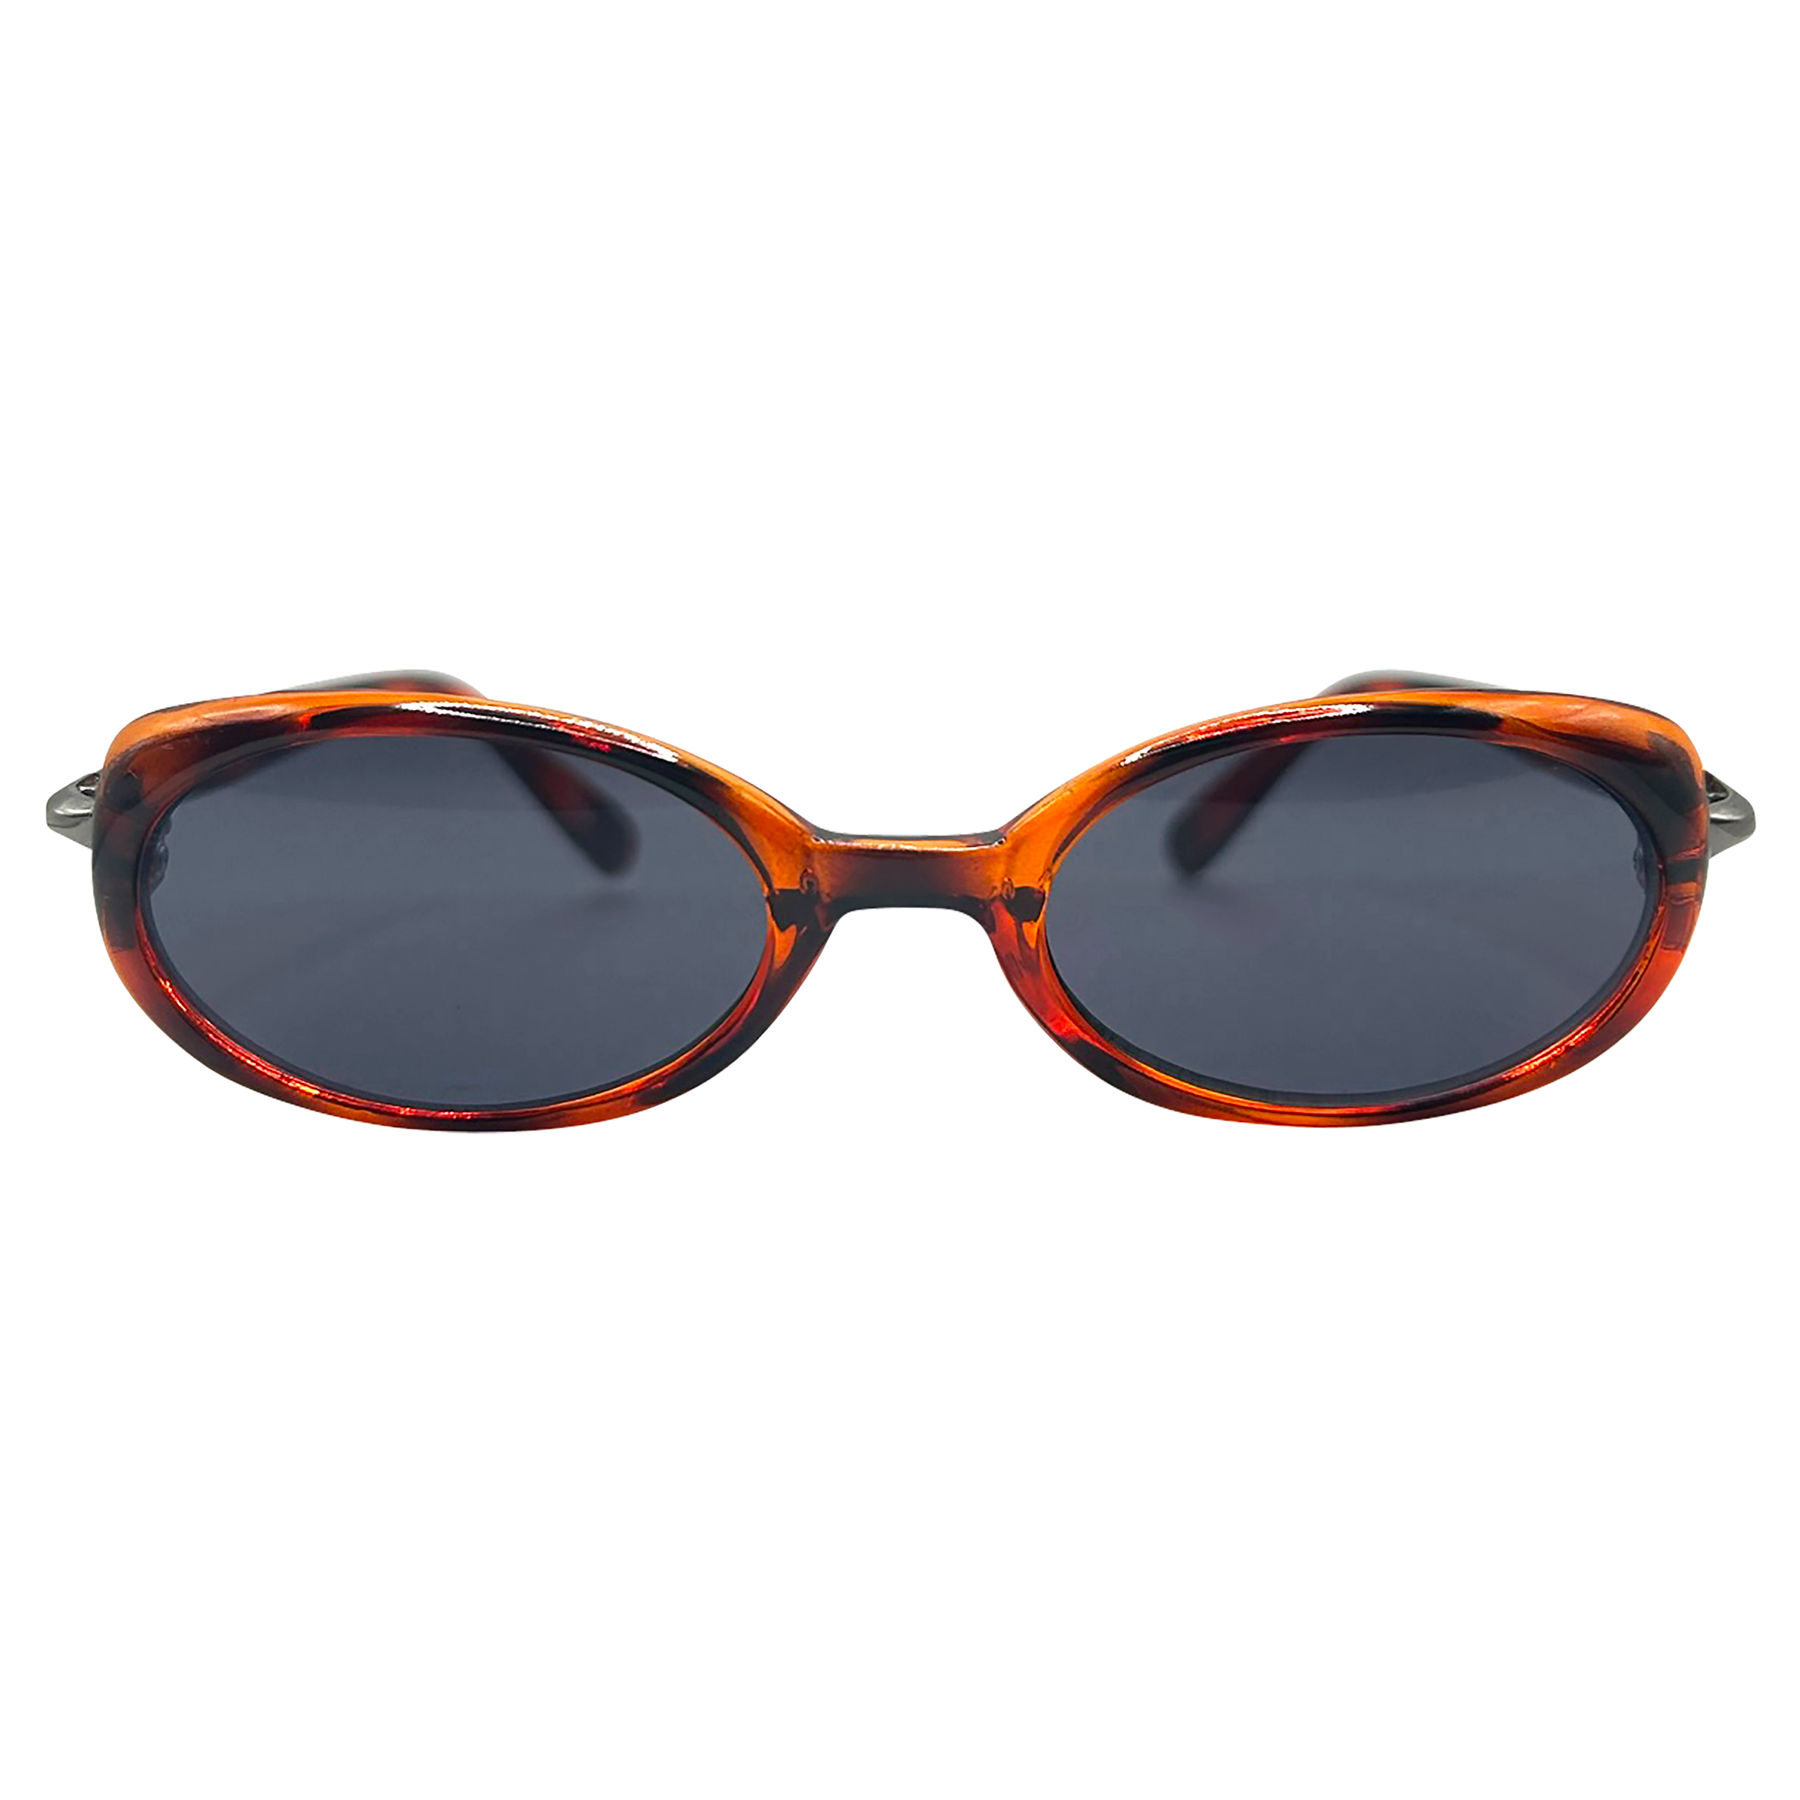 TWERP Tortoise/Super Dark Oval Sunglasses